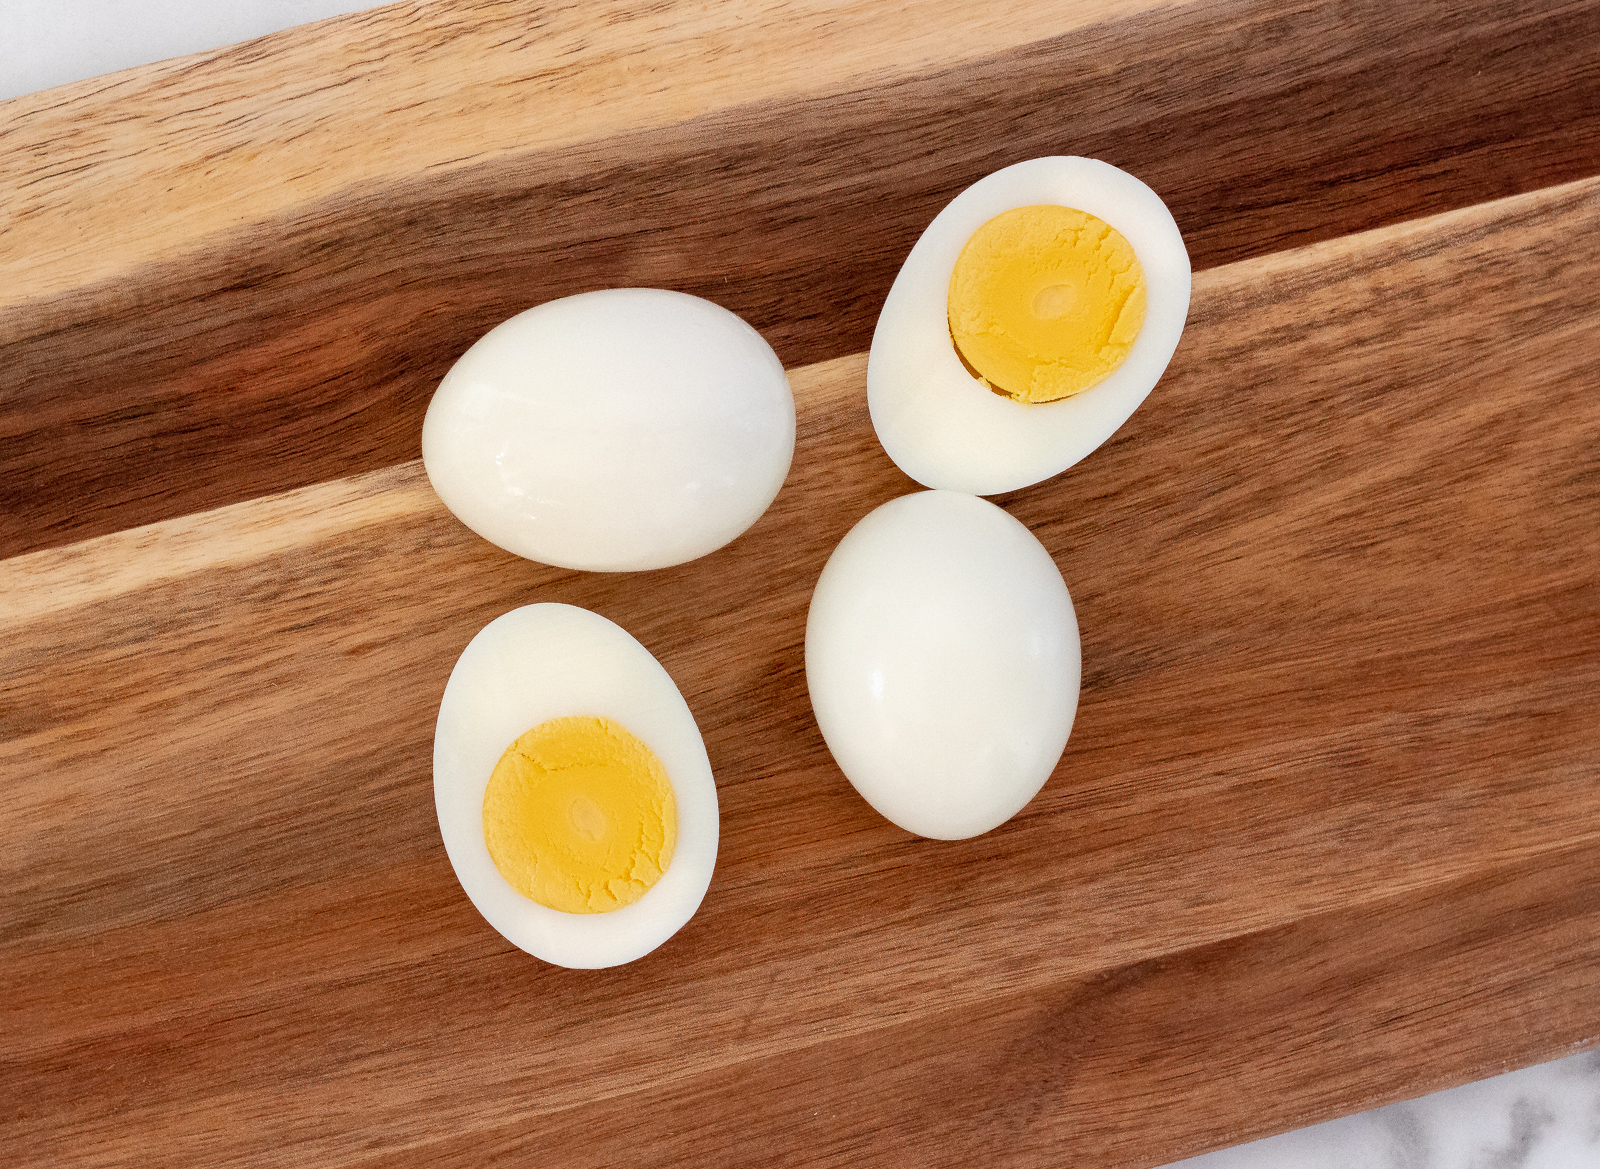 http://everydaylaura.com/wp-content/uploads/Perfect-hard-boiled-eggs-6.jpg